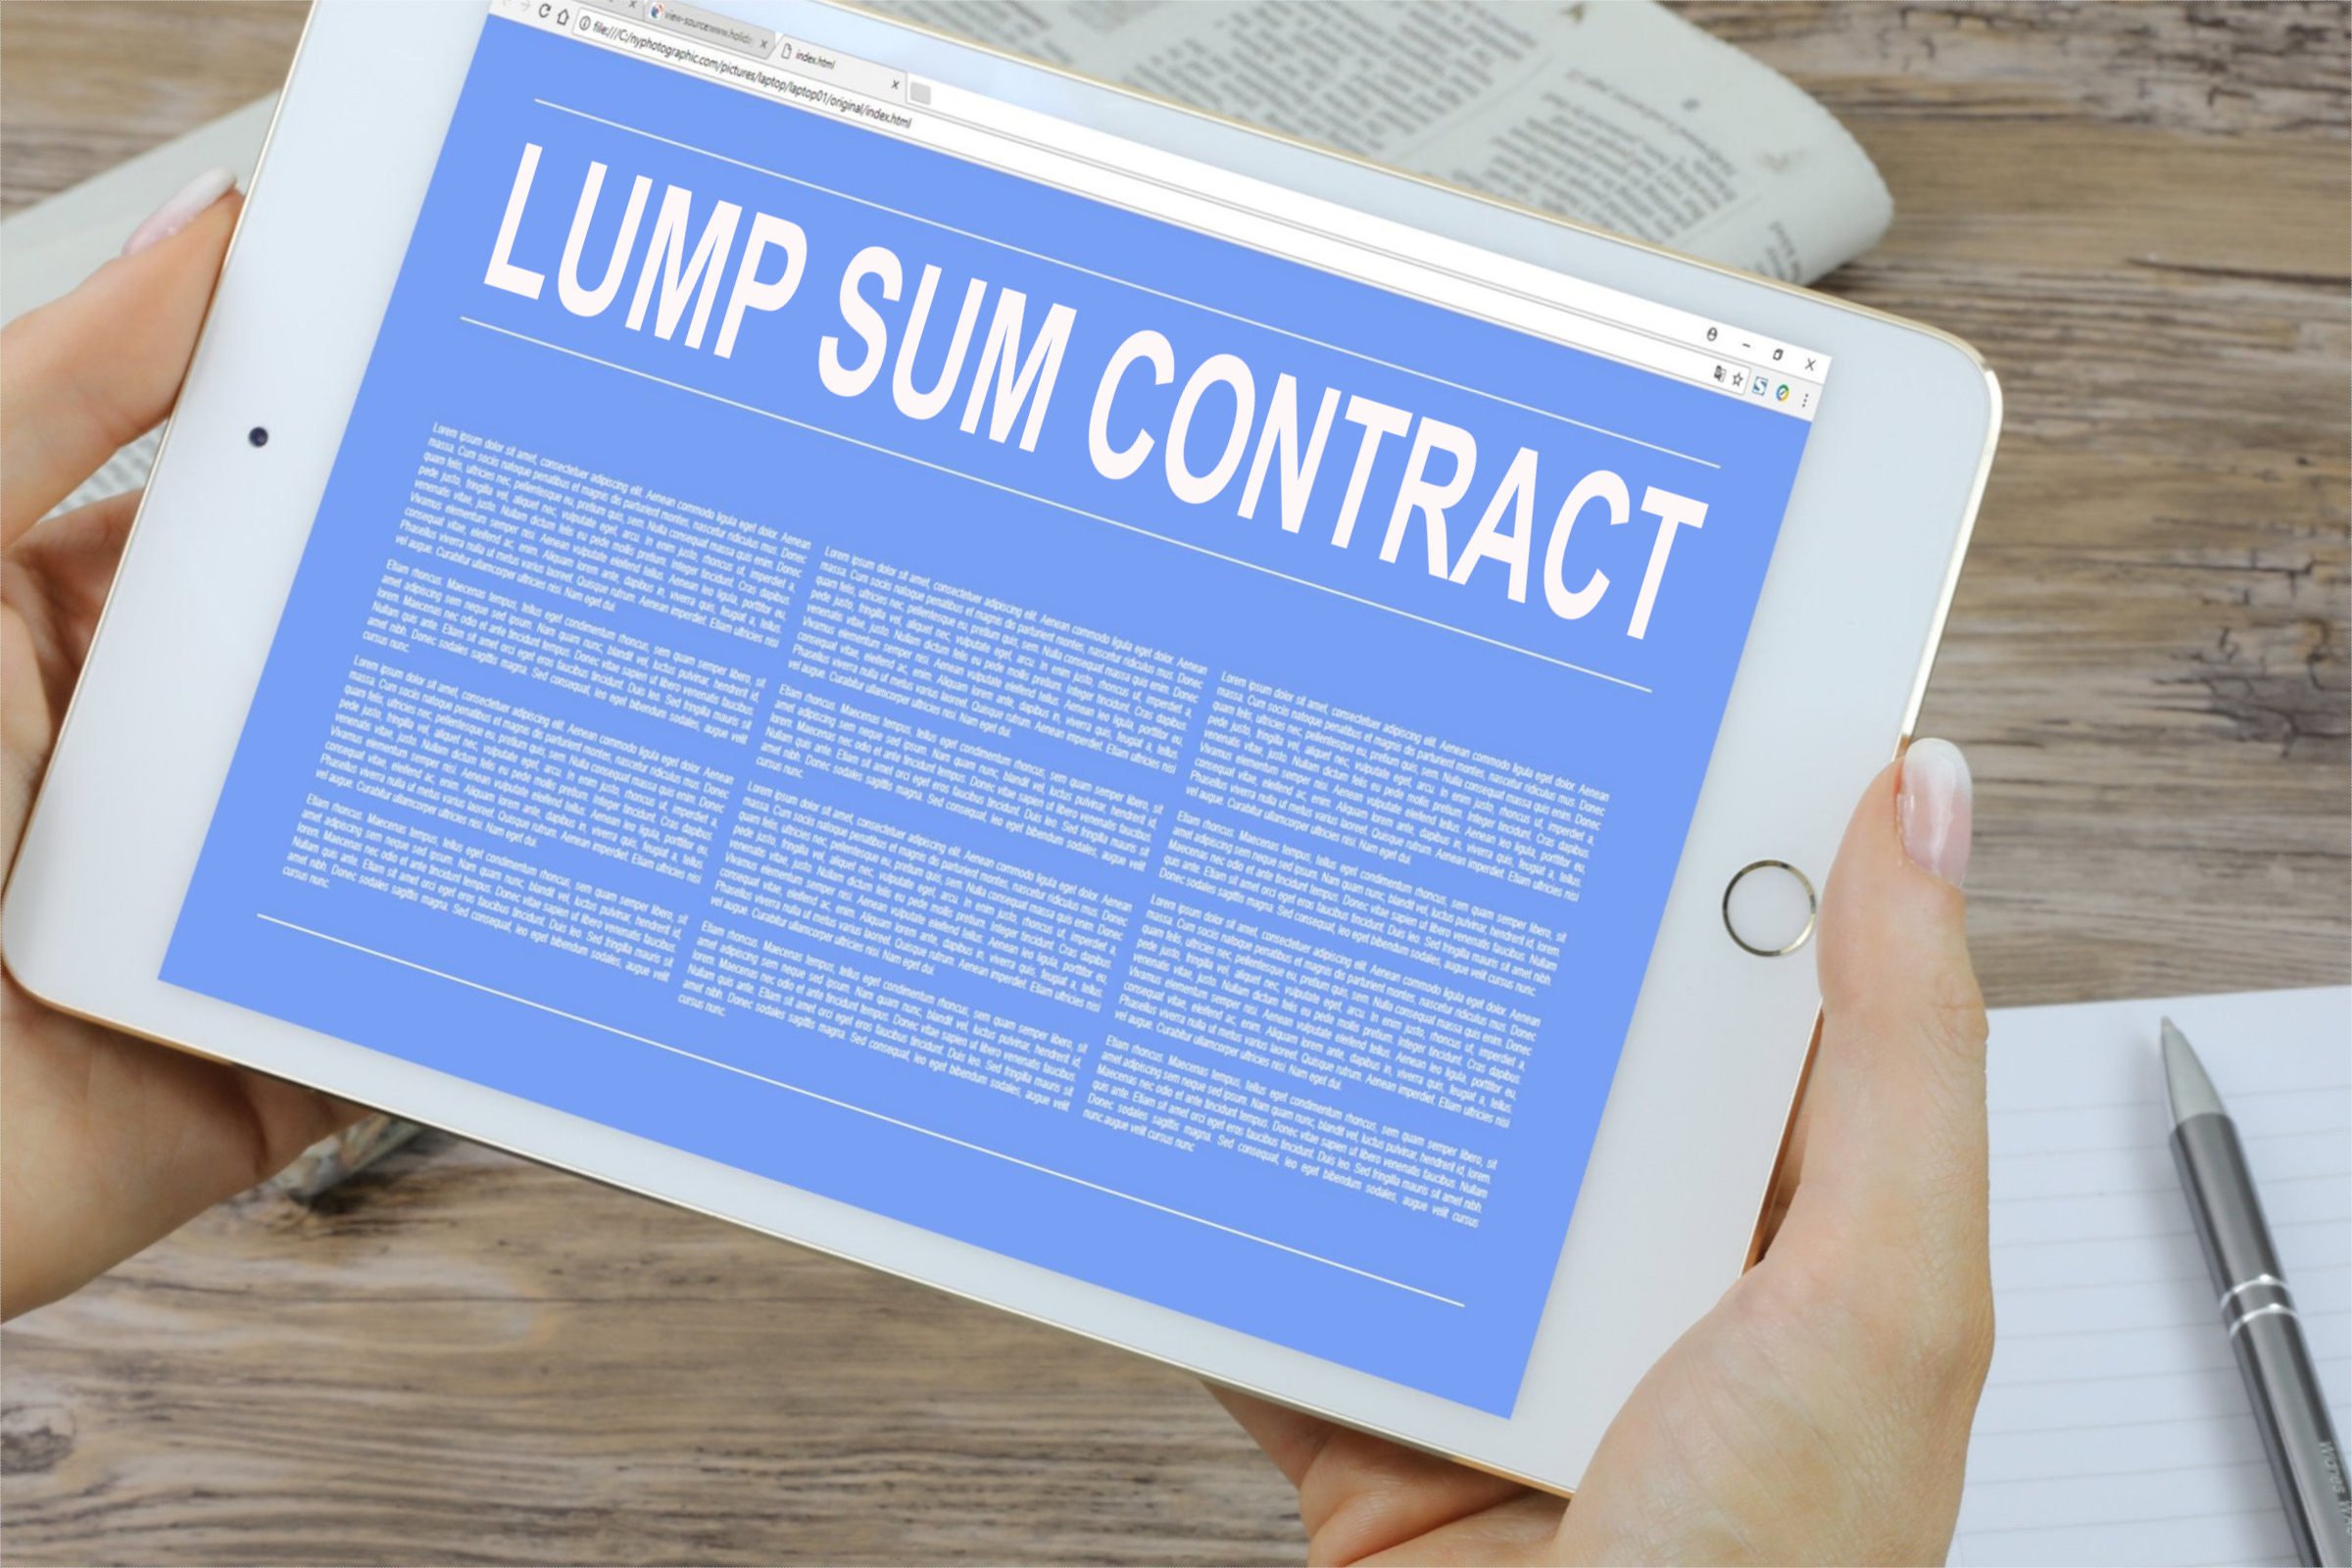 lump sum contract